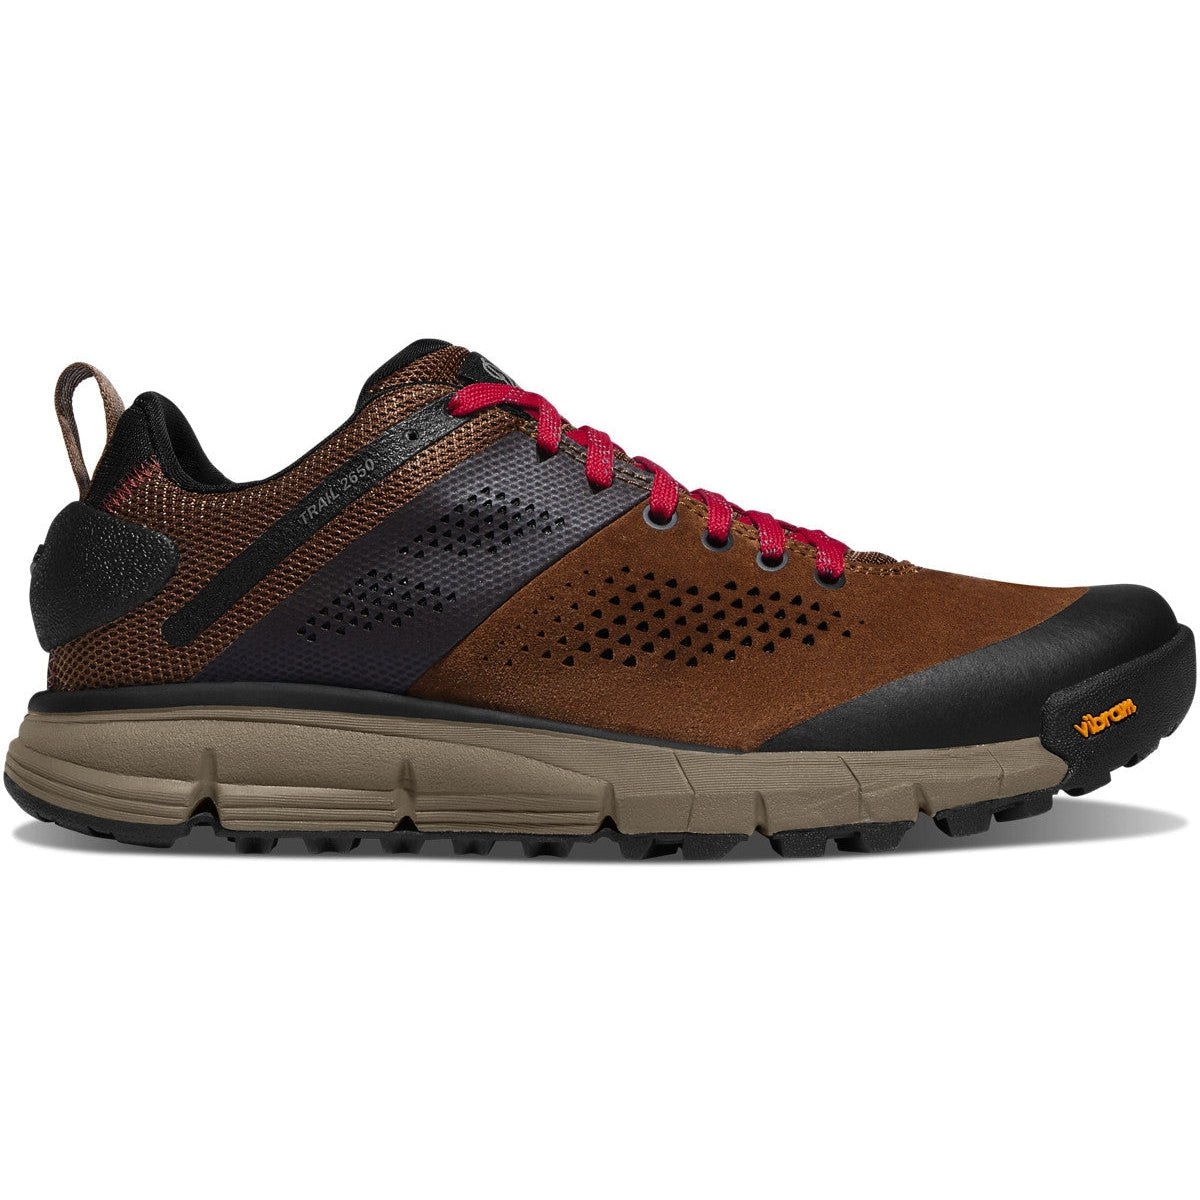 Danner Women's Trail 2650 GTX 3" Hiker Shoe - Brown/Red - 61300 5 / Medium / Organge - Overlook Boots